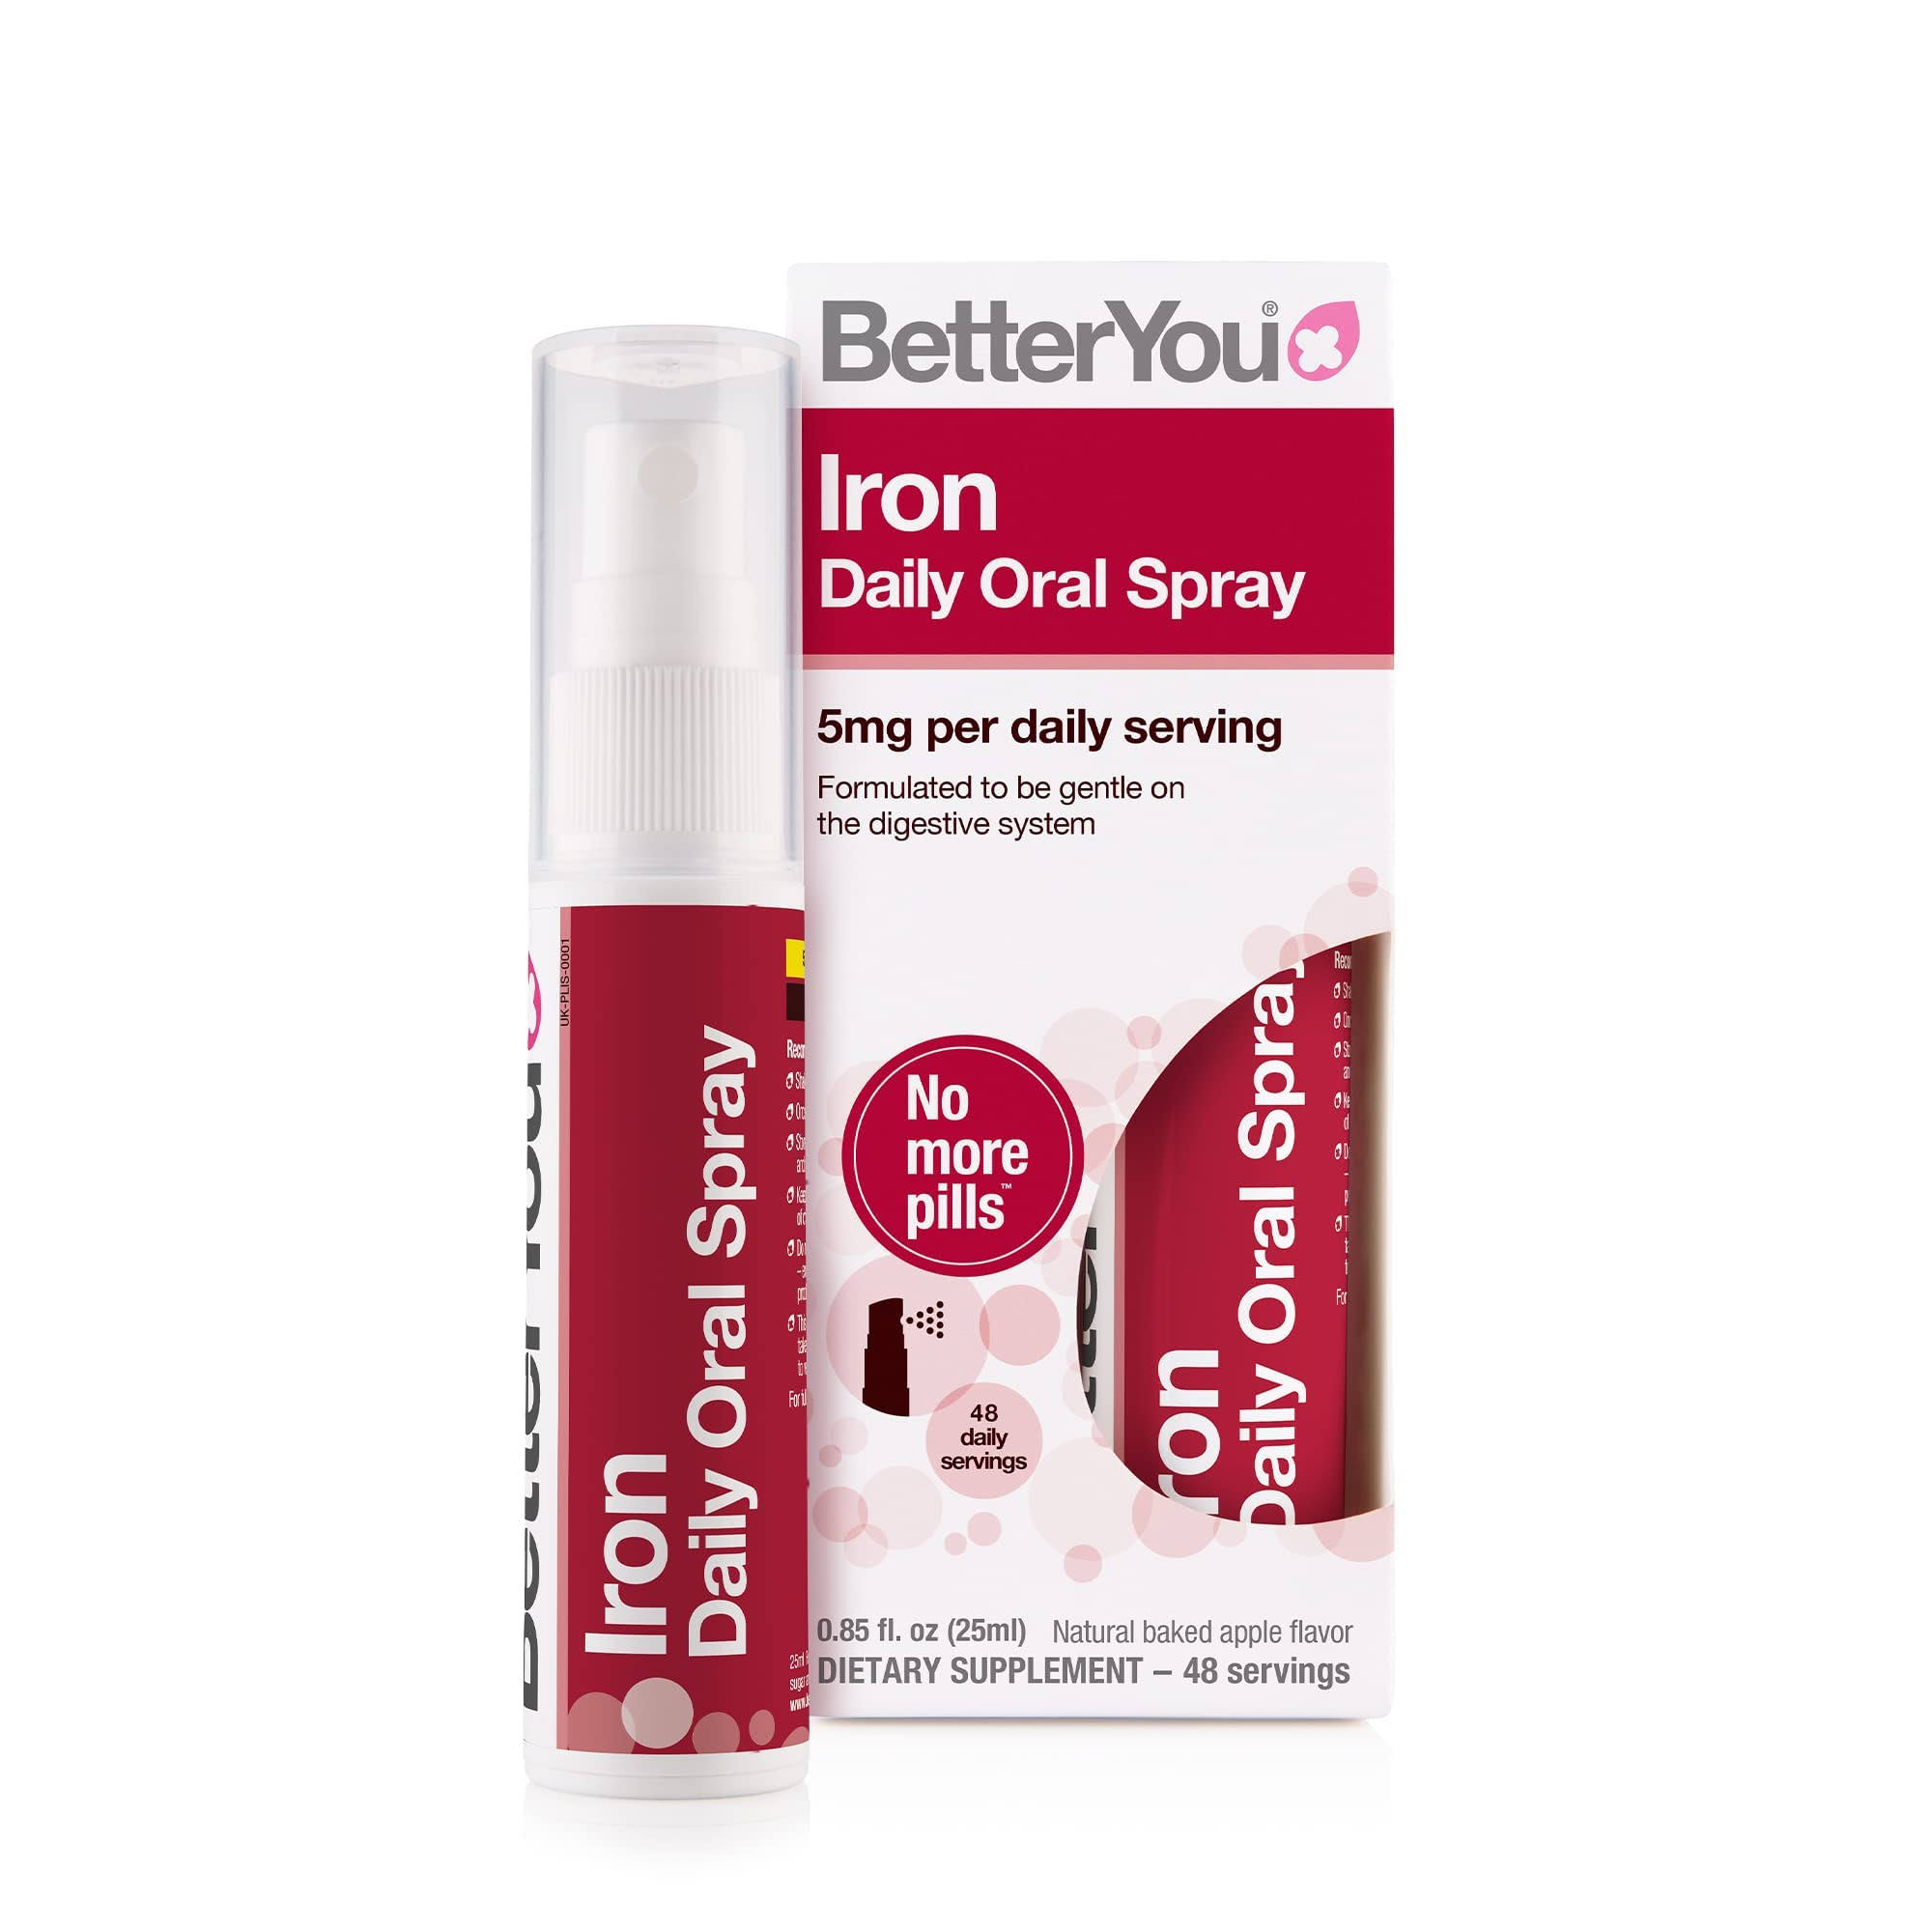 BetterYou Iron Daily Oral Spray - 25ml